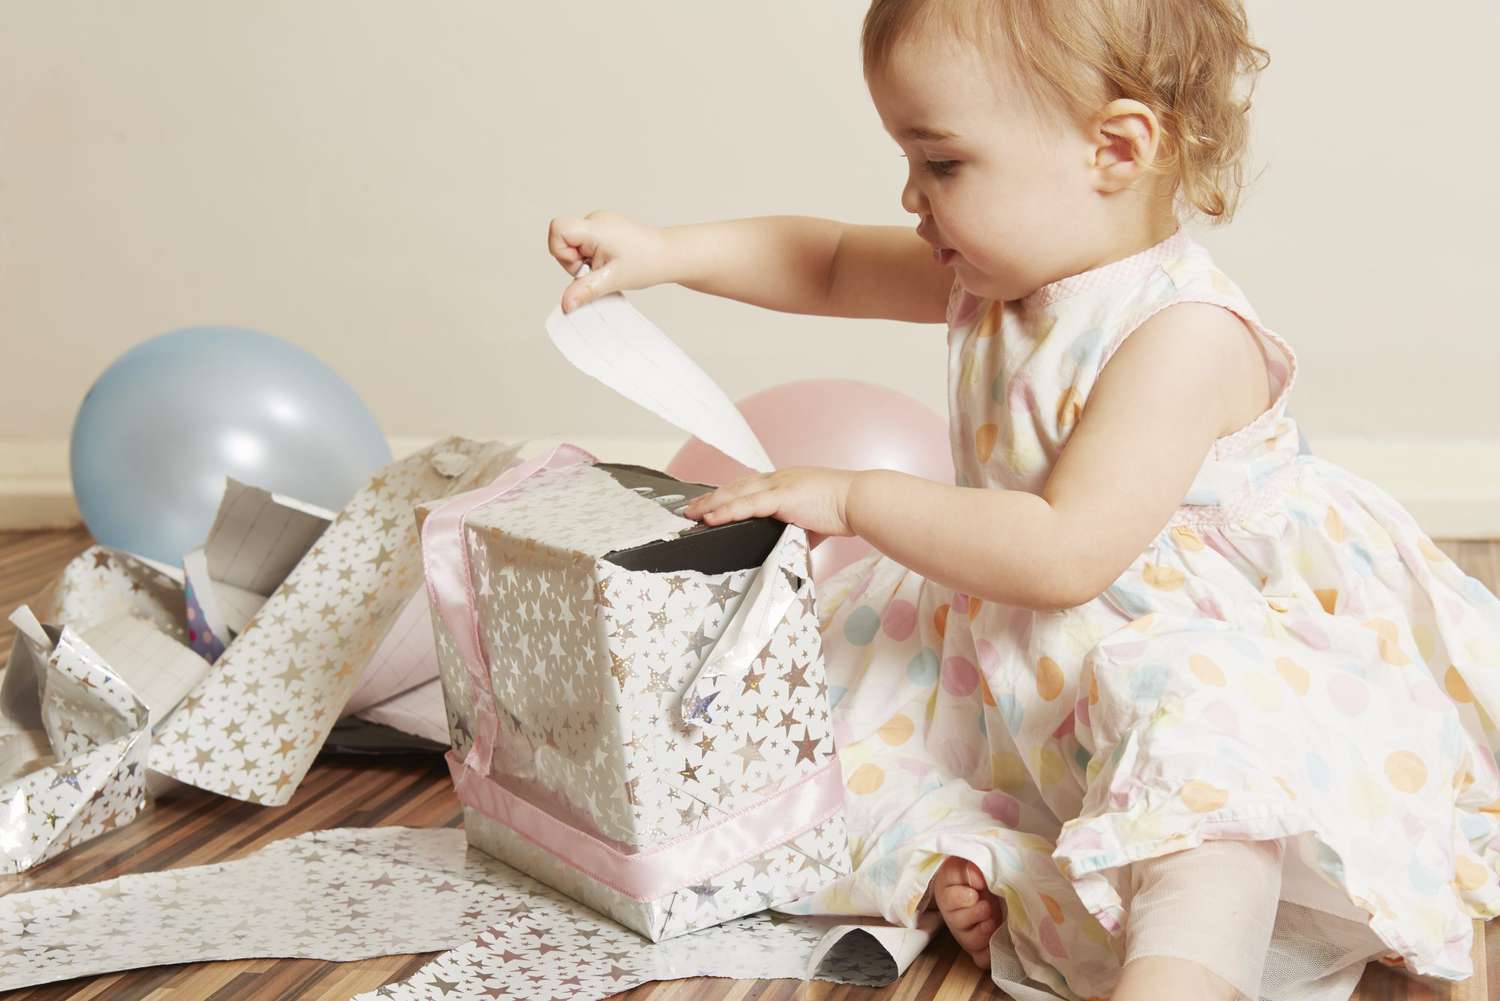 1st birthday gift ideas for girls